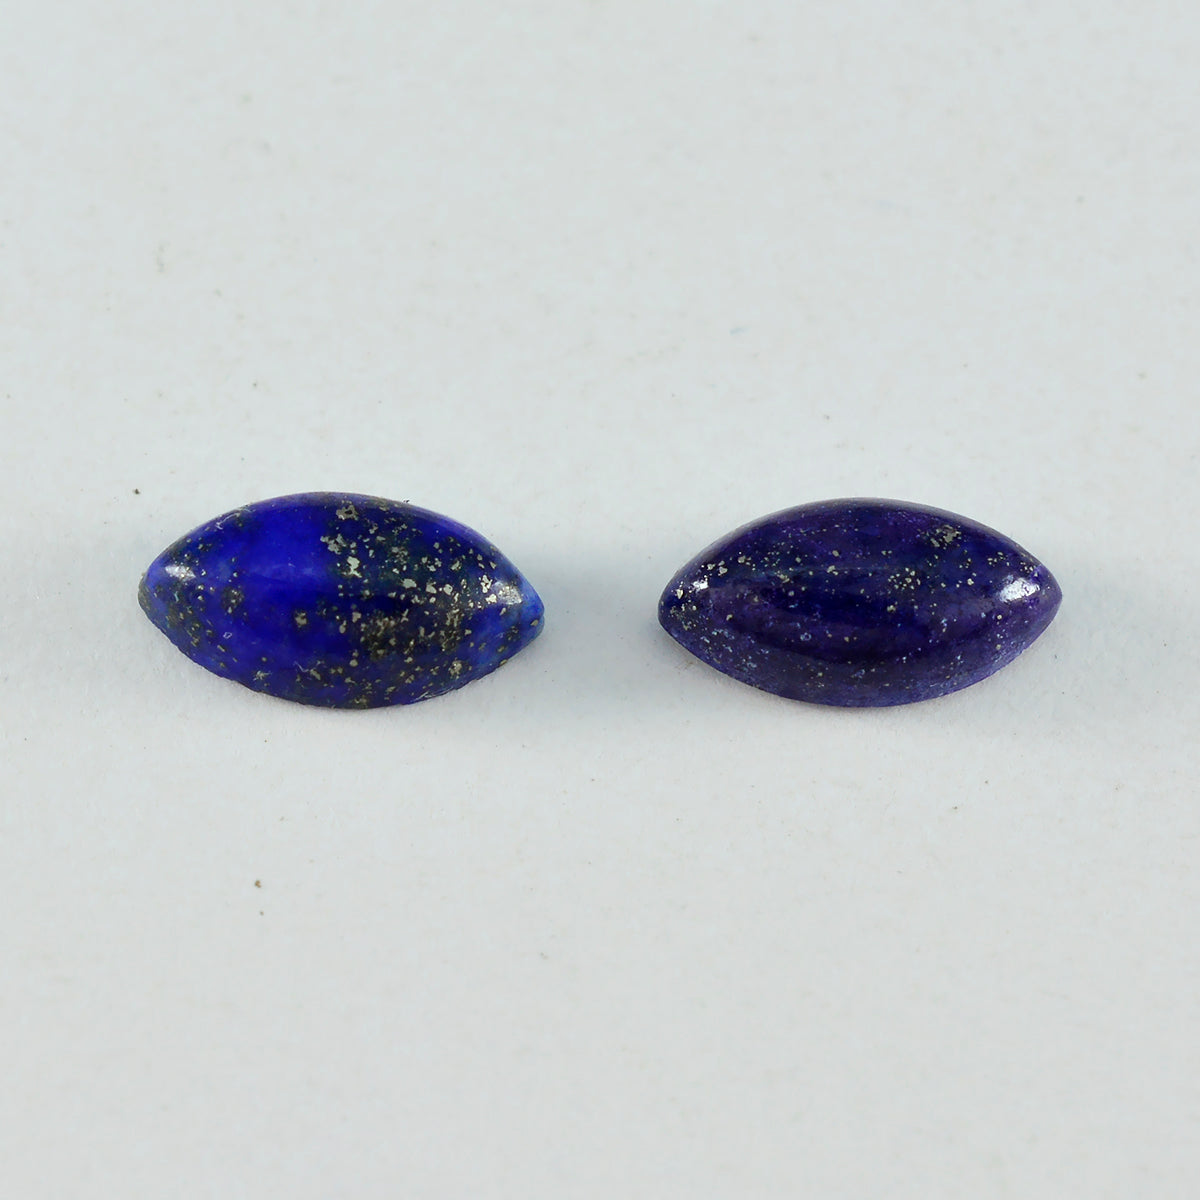 Riyogems 1PC Blue Lapis Lazuli Cabochon 10x20 mm Marquise Shape great Quality Loose Stone